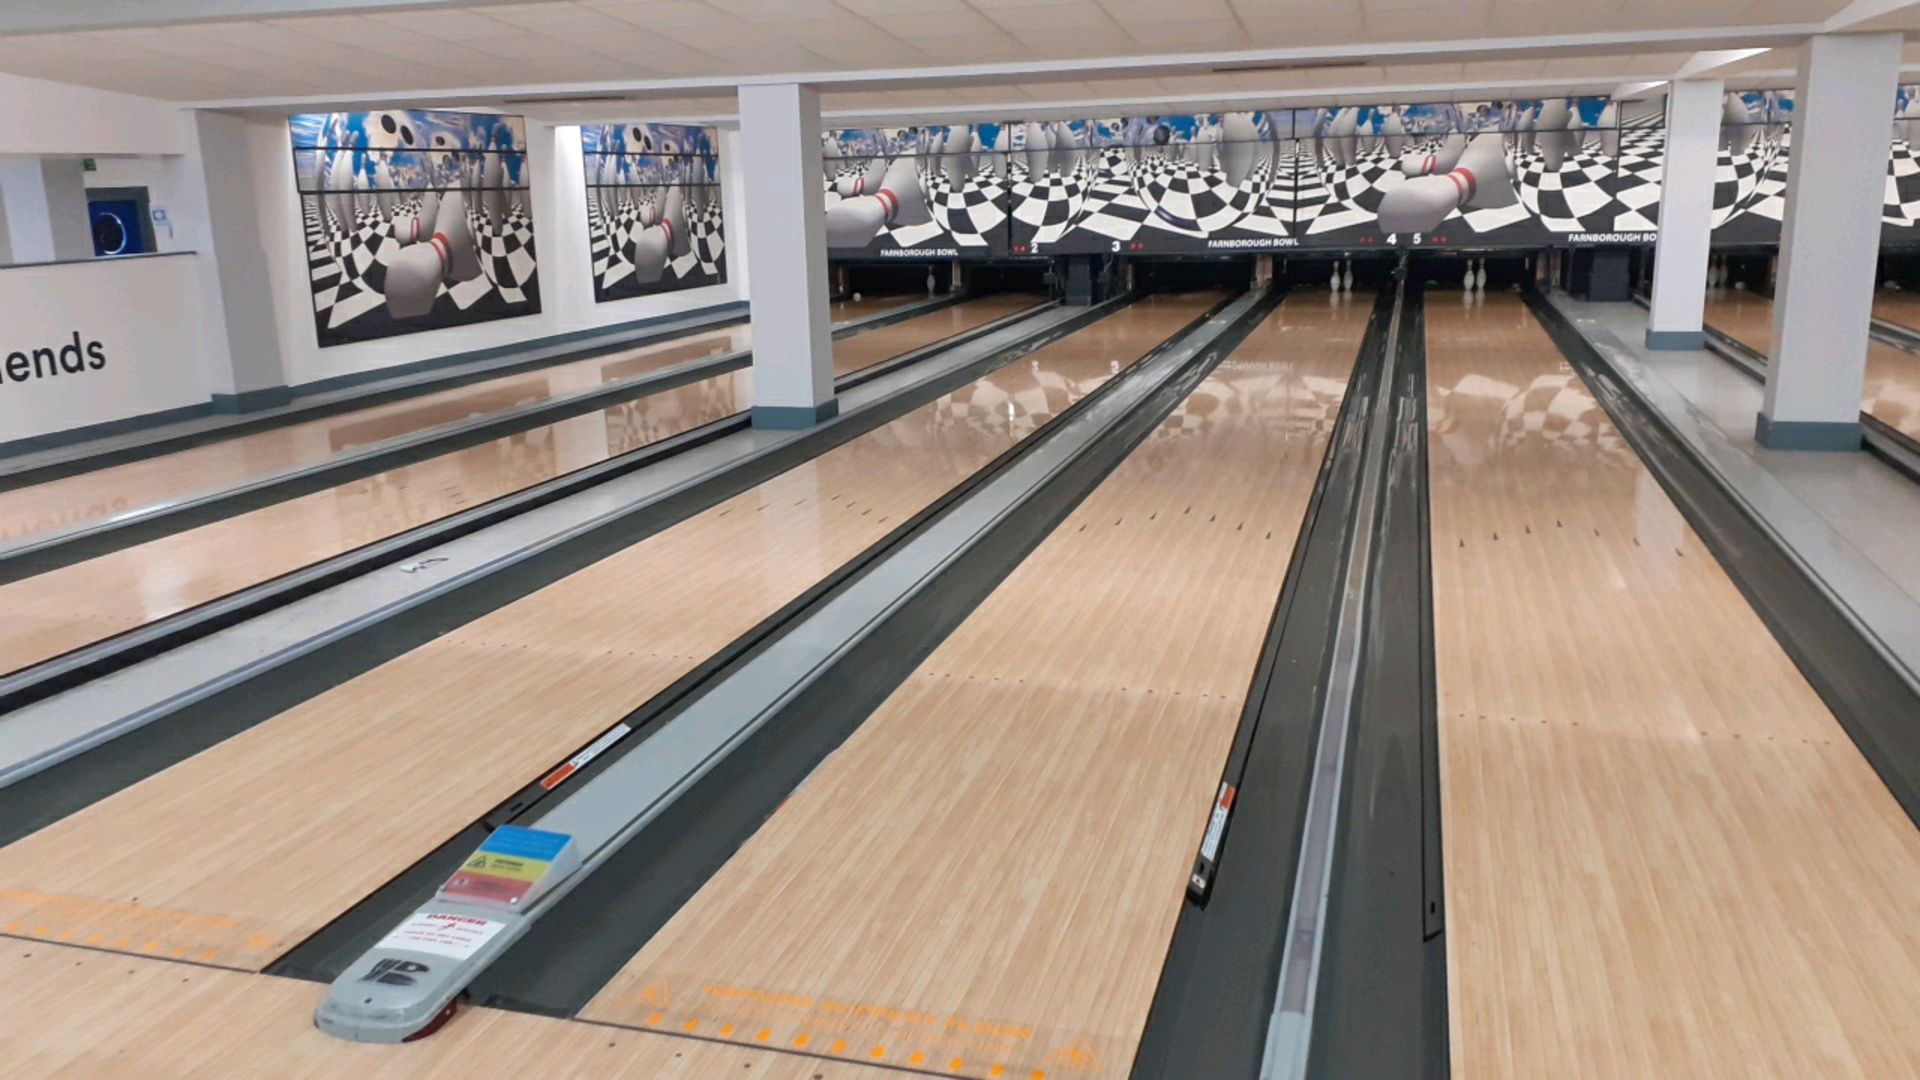 Brunswick 10 lane bowling alley - Image 12 of 42